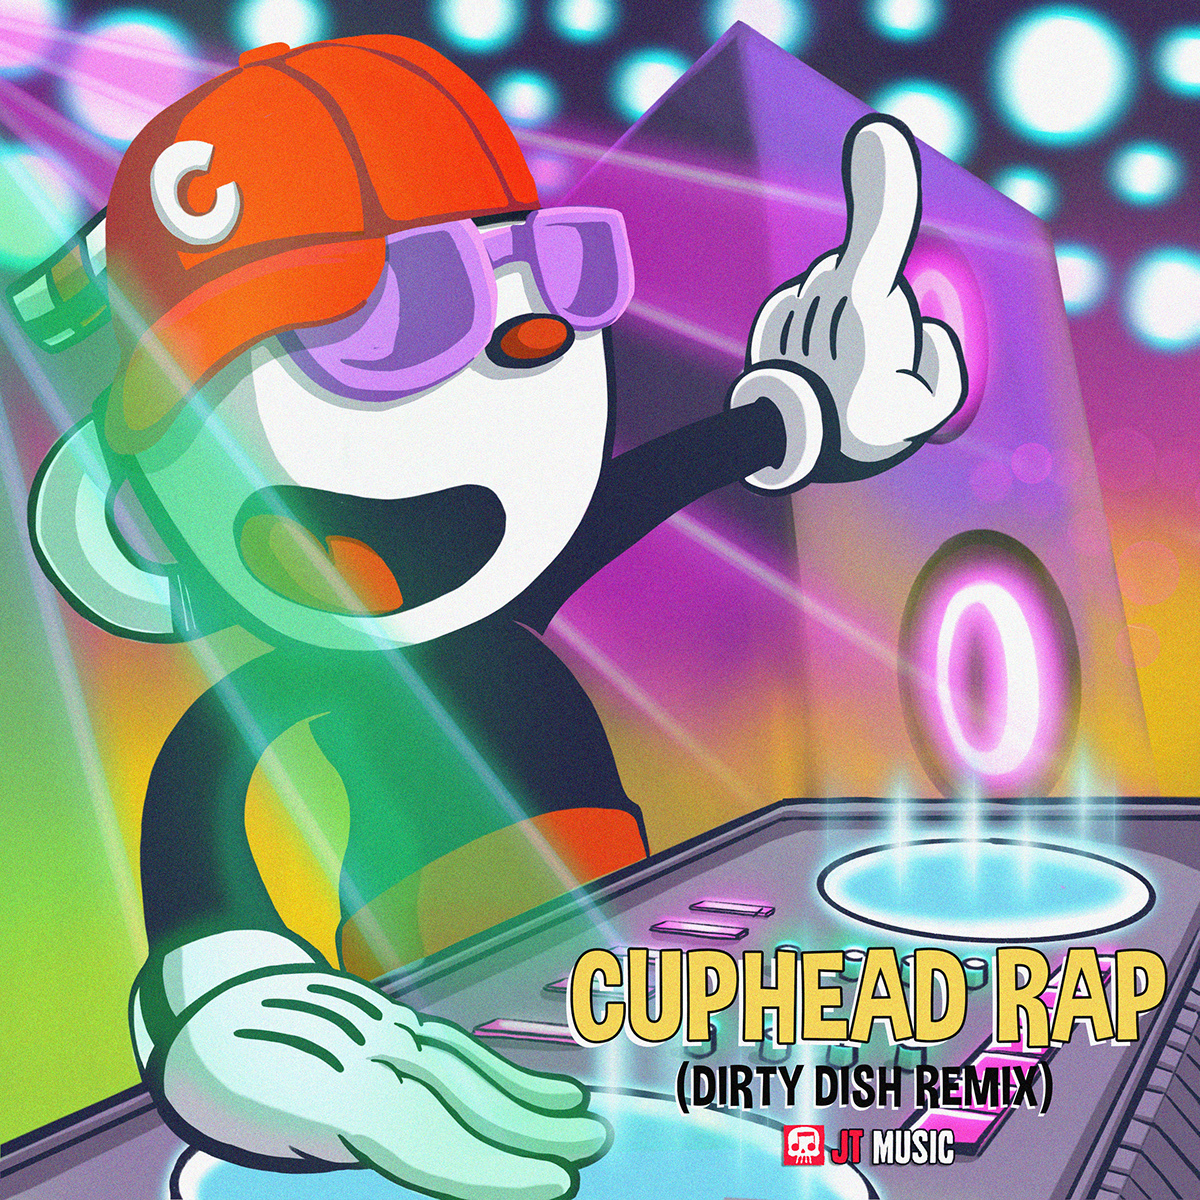 Песня jt music. Cuphead Rap by JT Music. Грязный Мьюзик. Song JT Music. Cuphead Rap текст перевод.